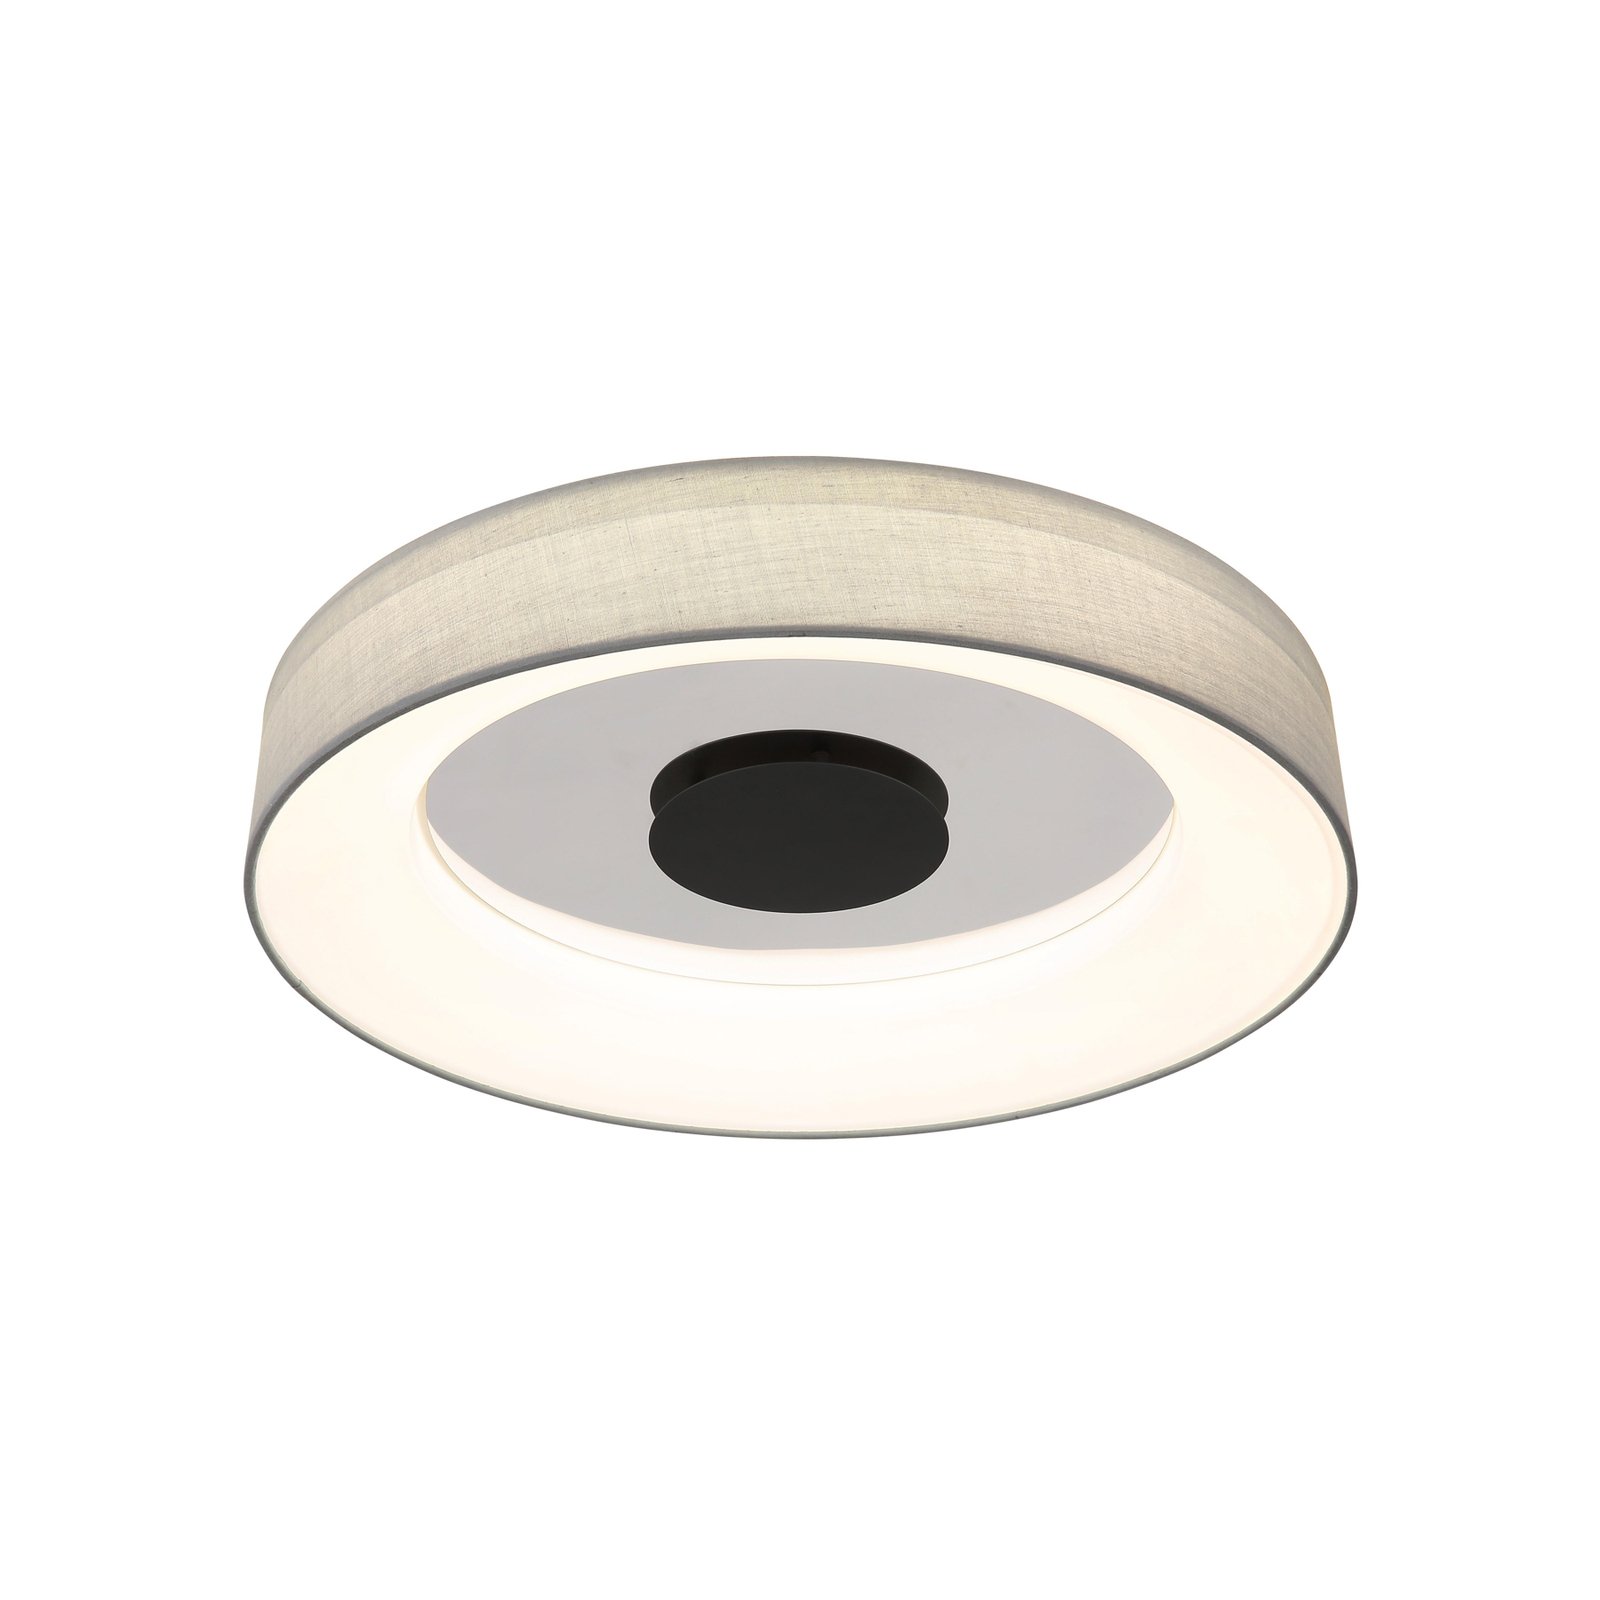 Smart LED-taklampa Terpsa, vit/grå, Ø 46,8 cm, tyg